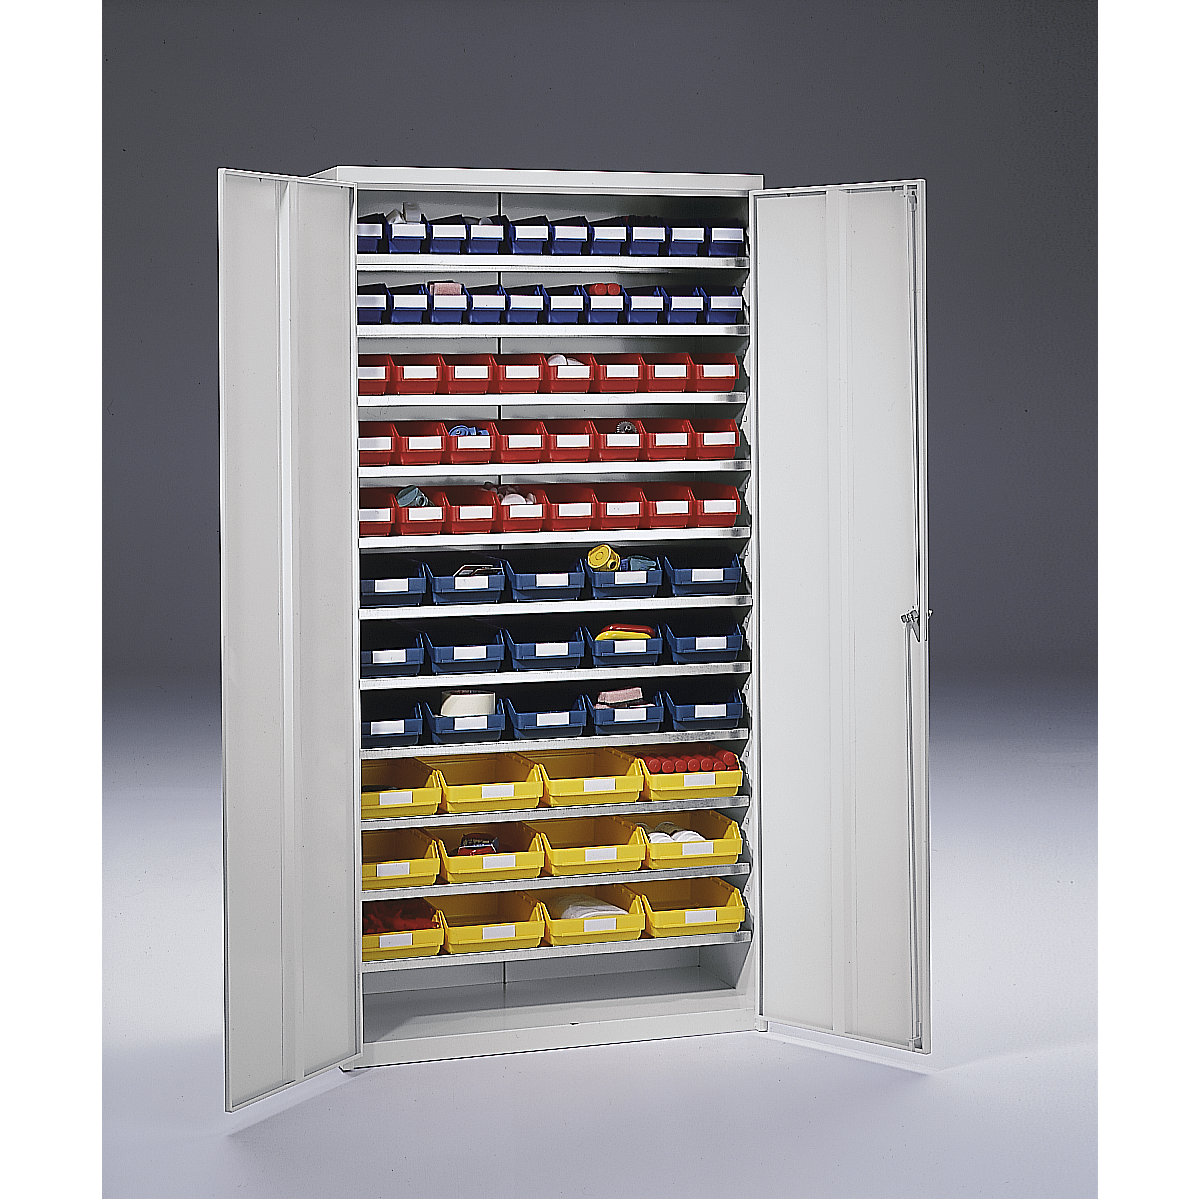 Armario-almacén – STEMO, H x A x P 1970 x 1000 x 450 mm, con cajas para estanterías, 71 cajas de diferentes colores-2